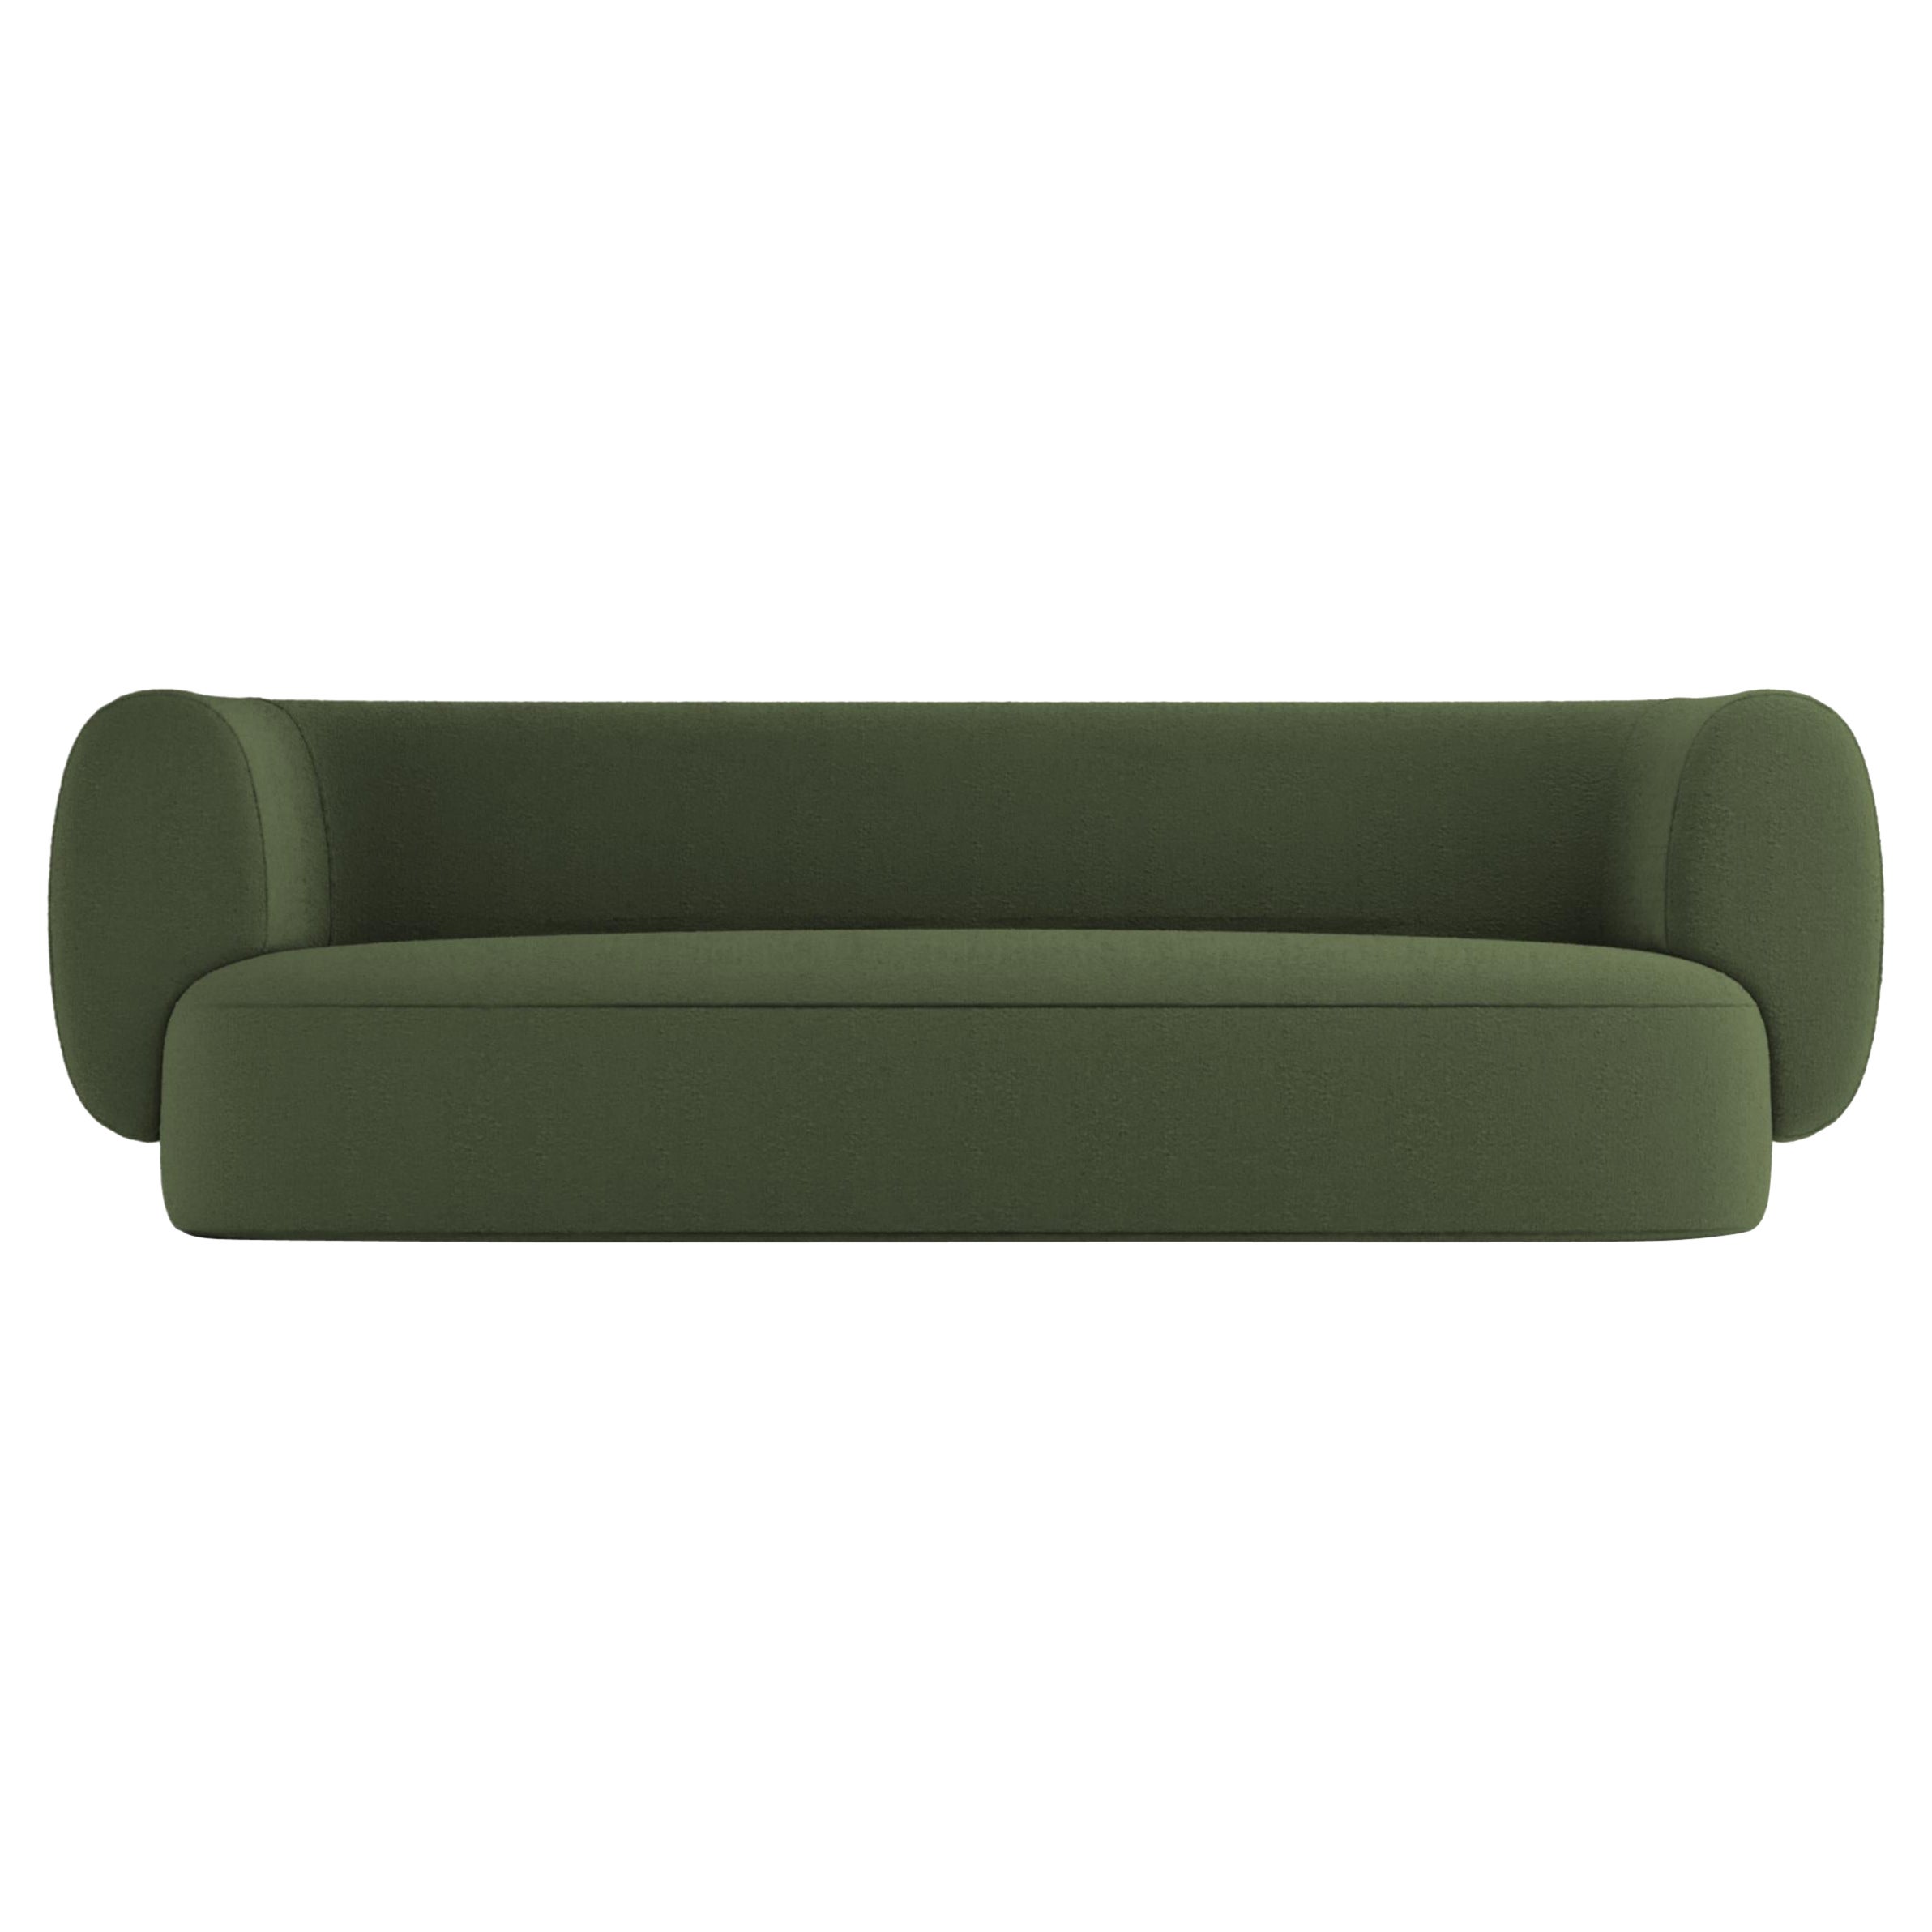 Sammler-Sofa, entworfen von Ferrianisbolgi, Boucle-Grün